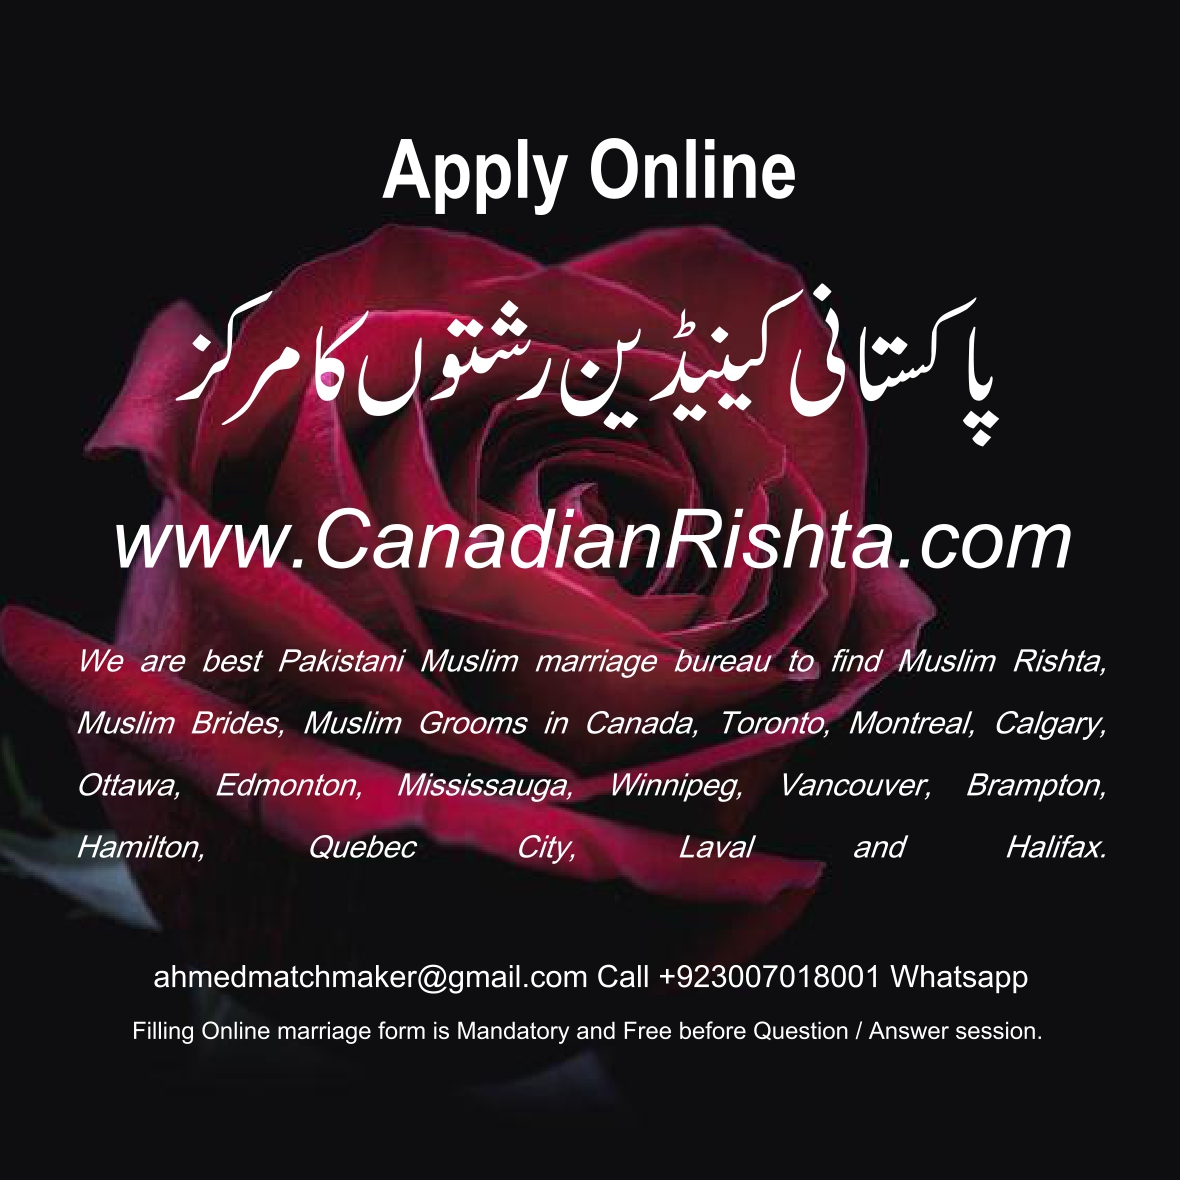 Pakistani-rishta-shaadi-marriage-bureau-Canada-Toronto-Montreal-Calgary-Ottawa-Vancouver-Brampton-Hamilton-Quebec-8.jpg